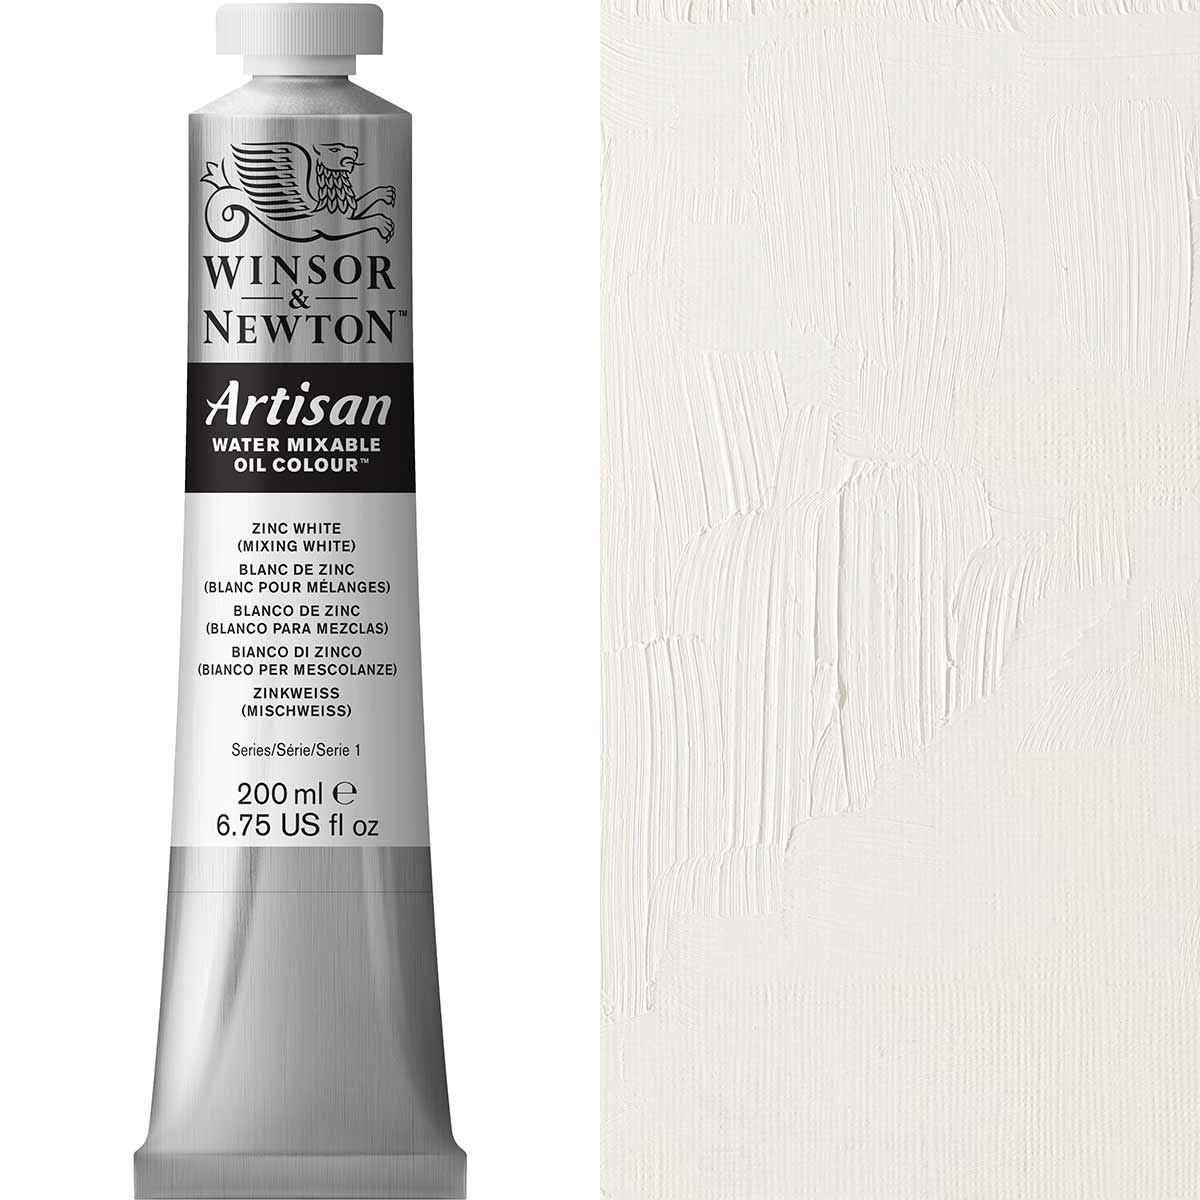 Winsor and Newton - Artisan Oil Colour Watermixable - 200ml - Zinc Mixing White